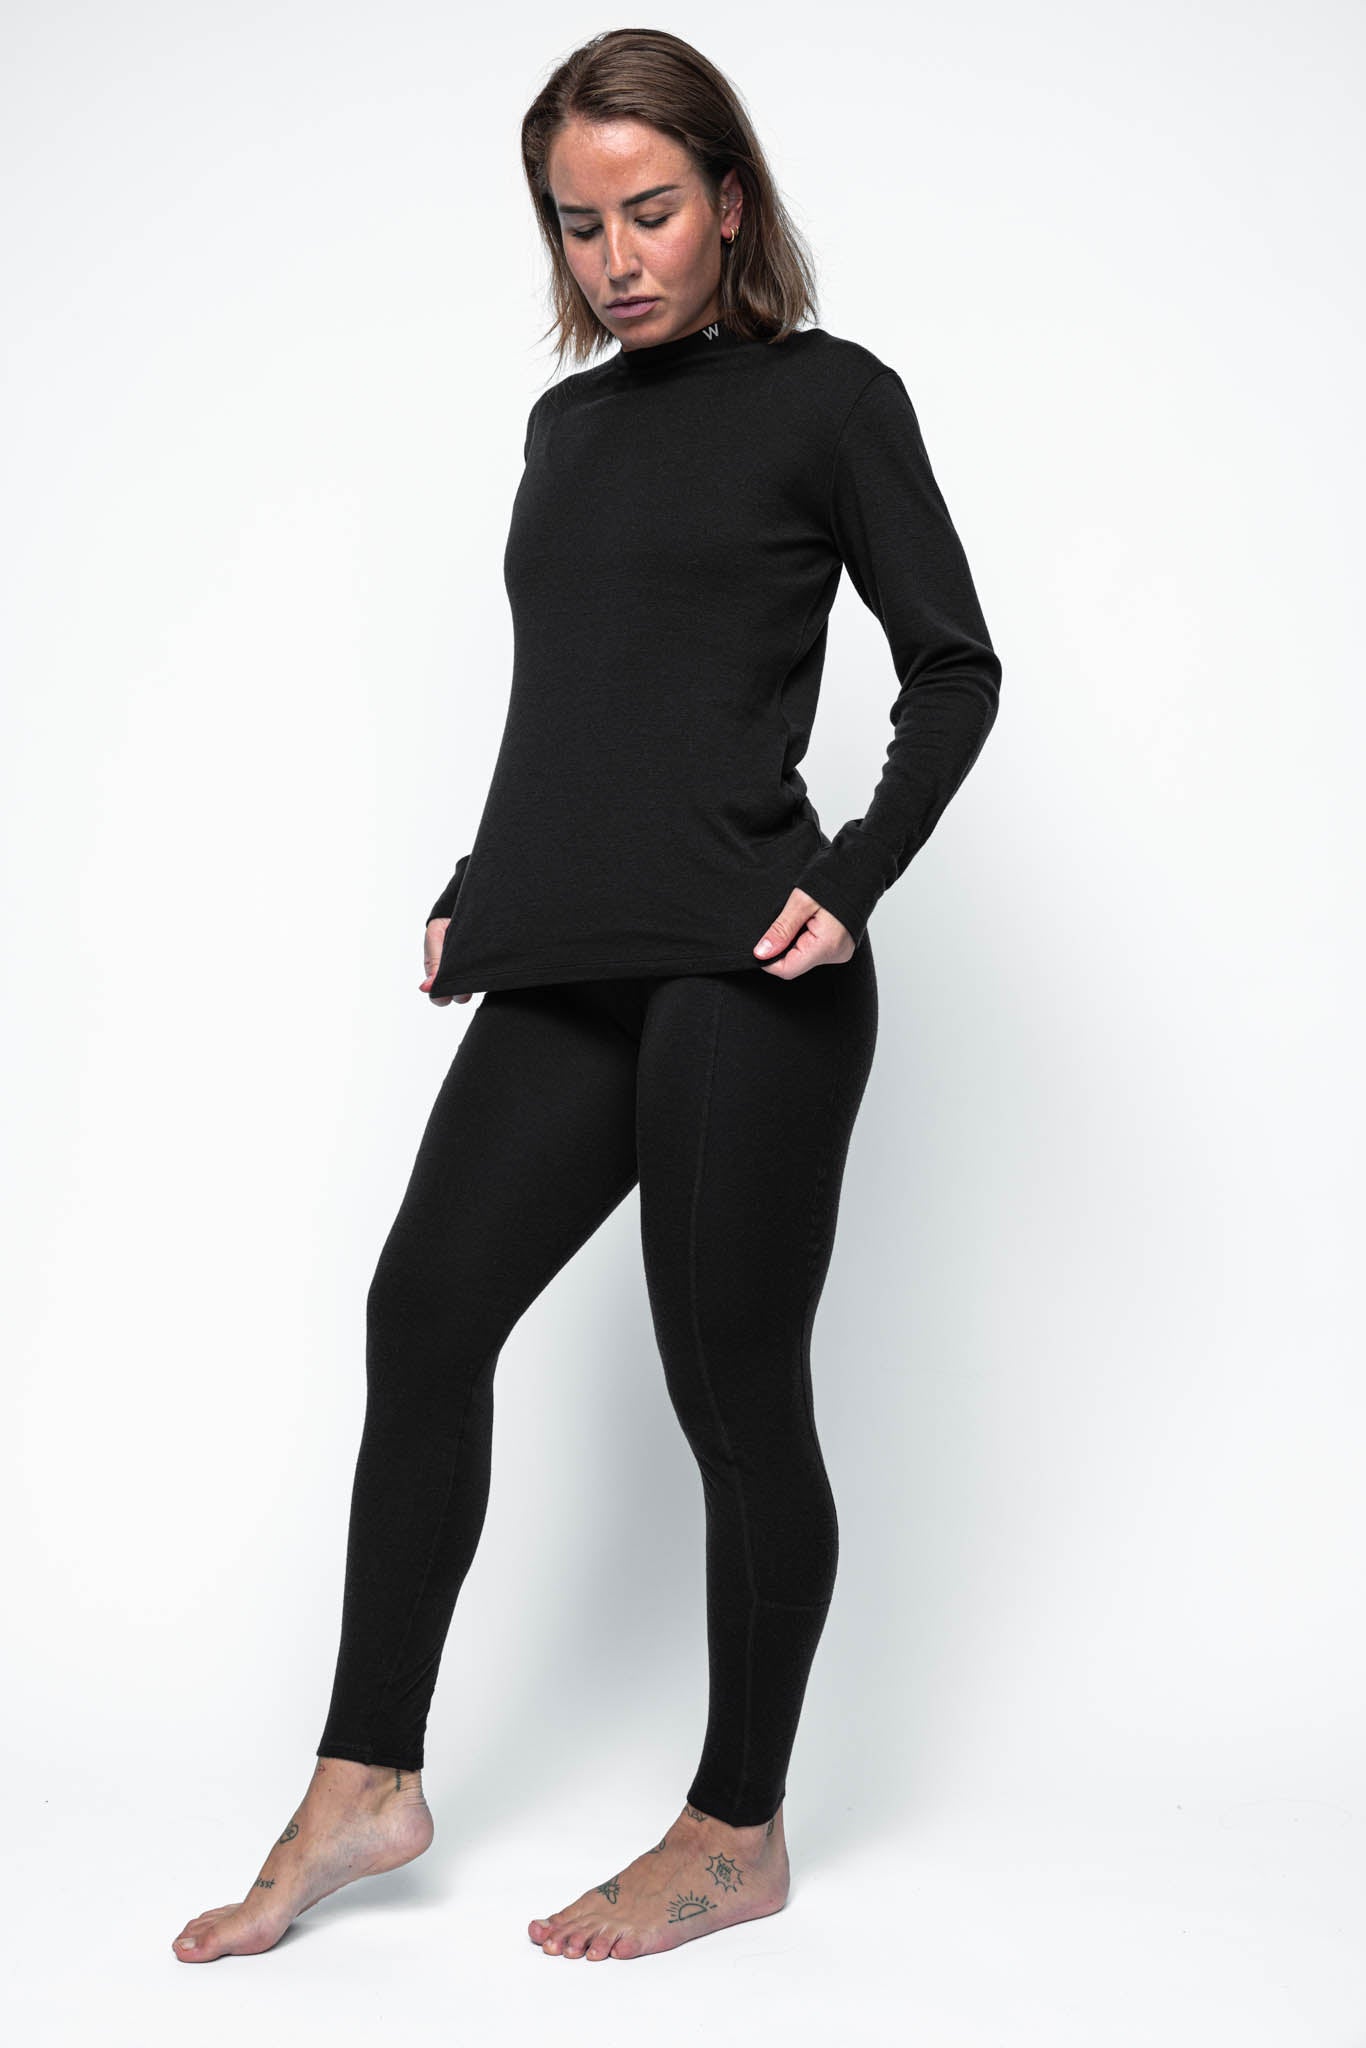 Betty Ski Merino Base Layer Leggings - Pentas Red Multi, Women's Ski  Clothes